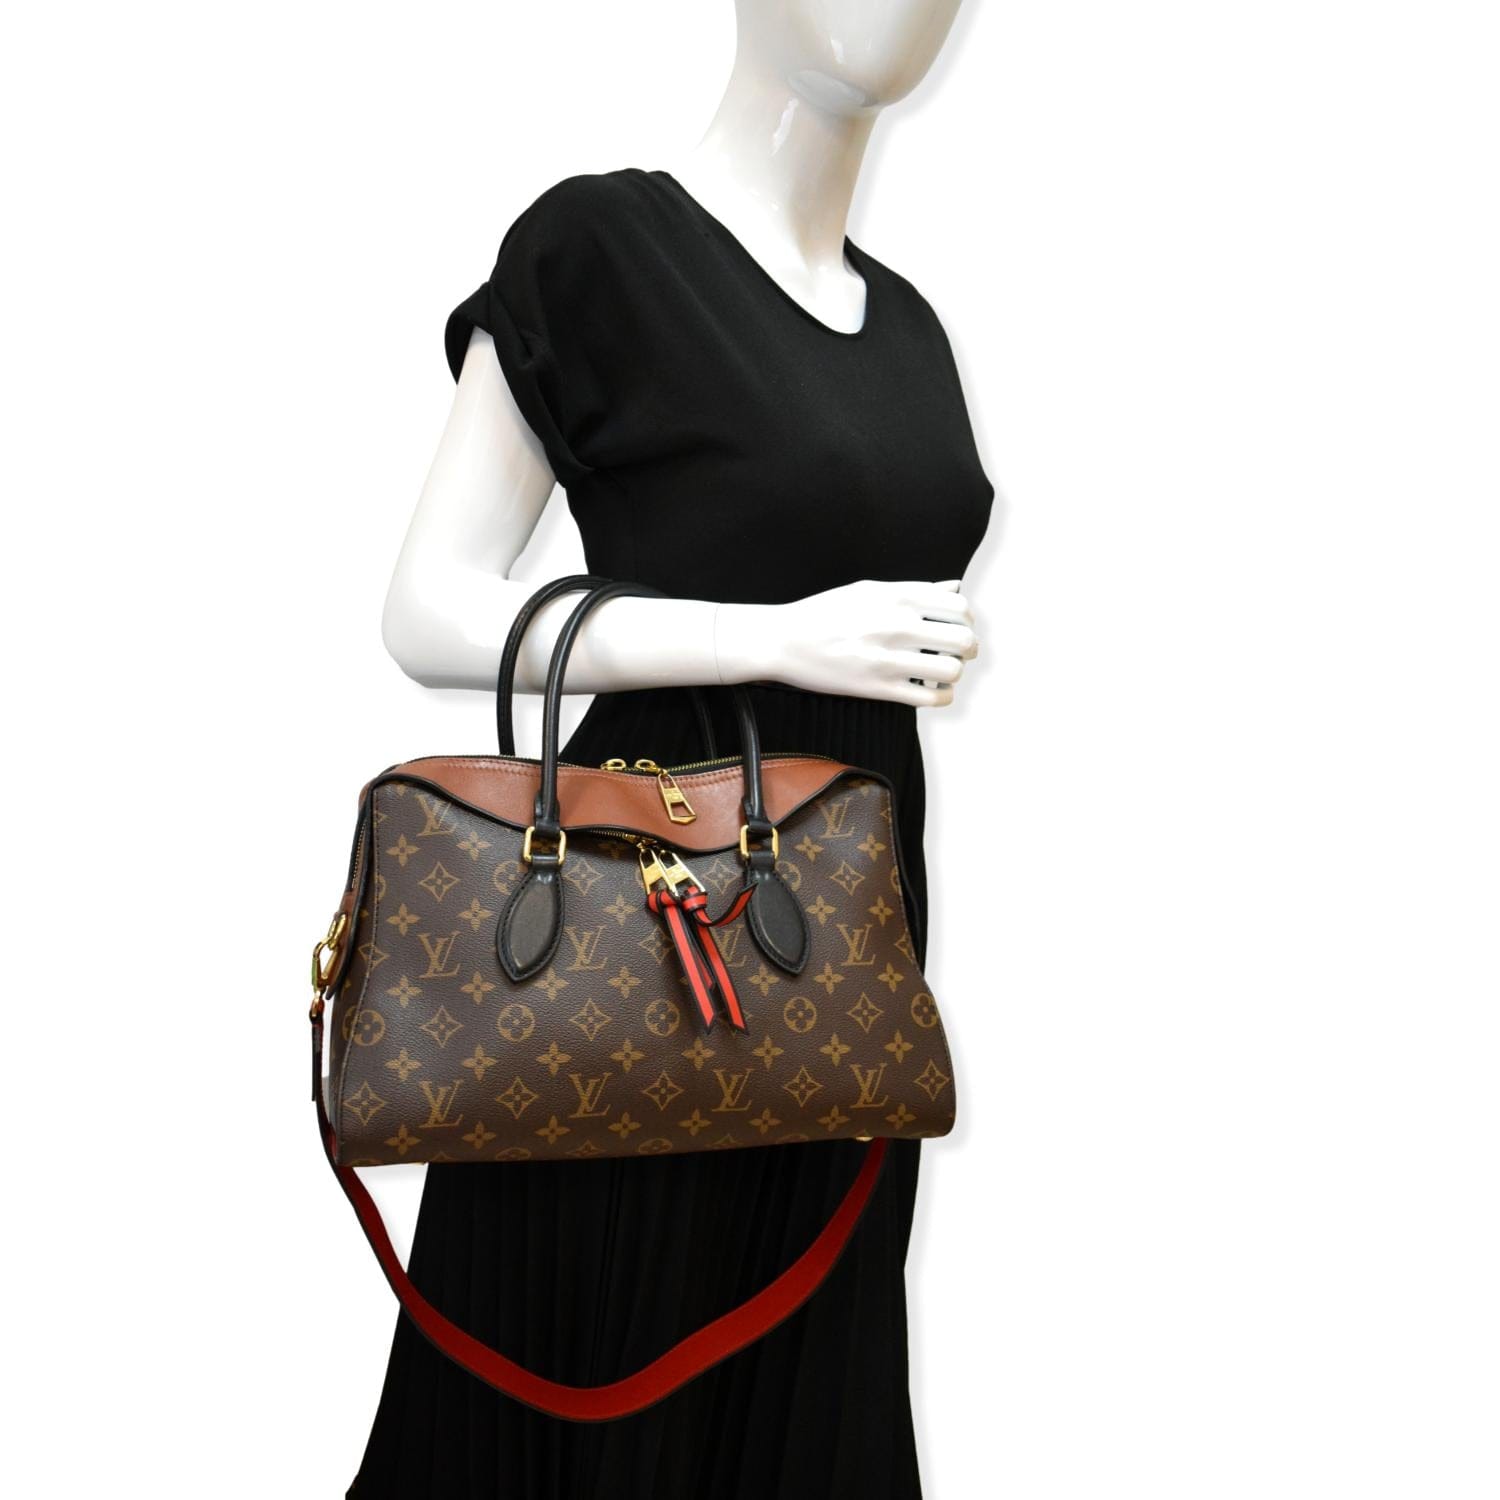 Louis Vuitton Tuileries Bags #Luxury #Fashion #Handbags  Louis vuitton, Louis  vuitton çanta, Louis vuitton çantalar